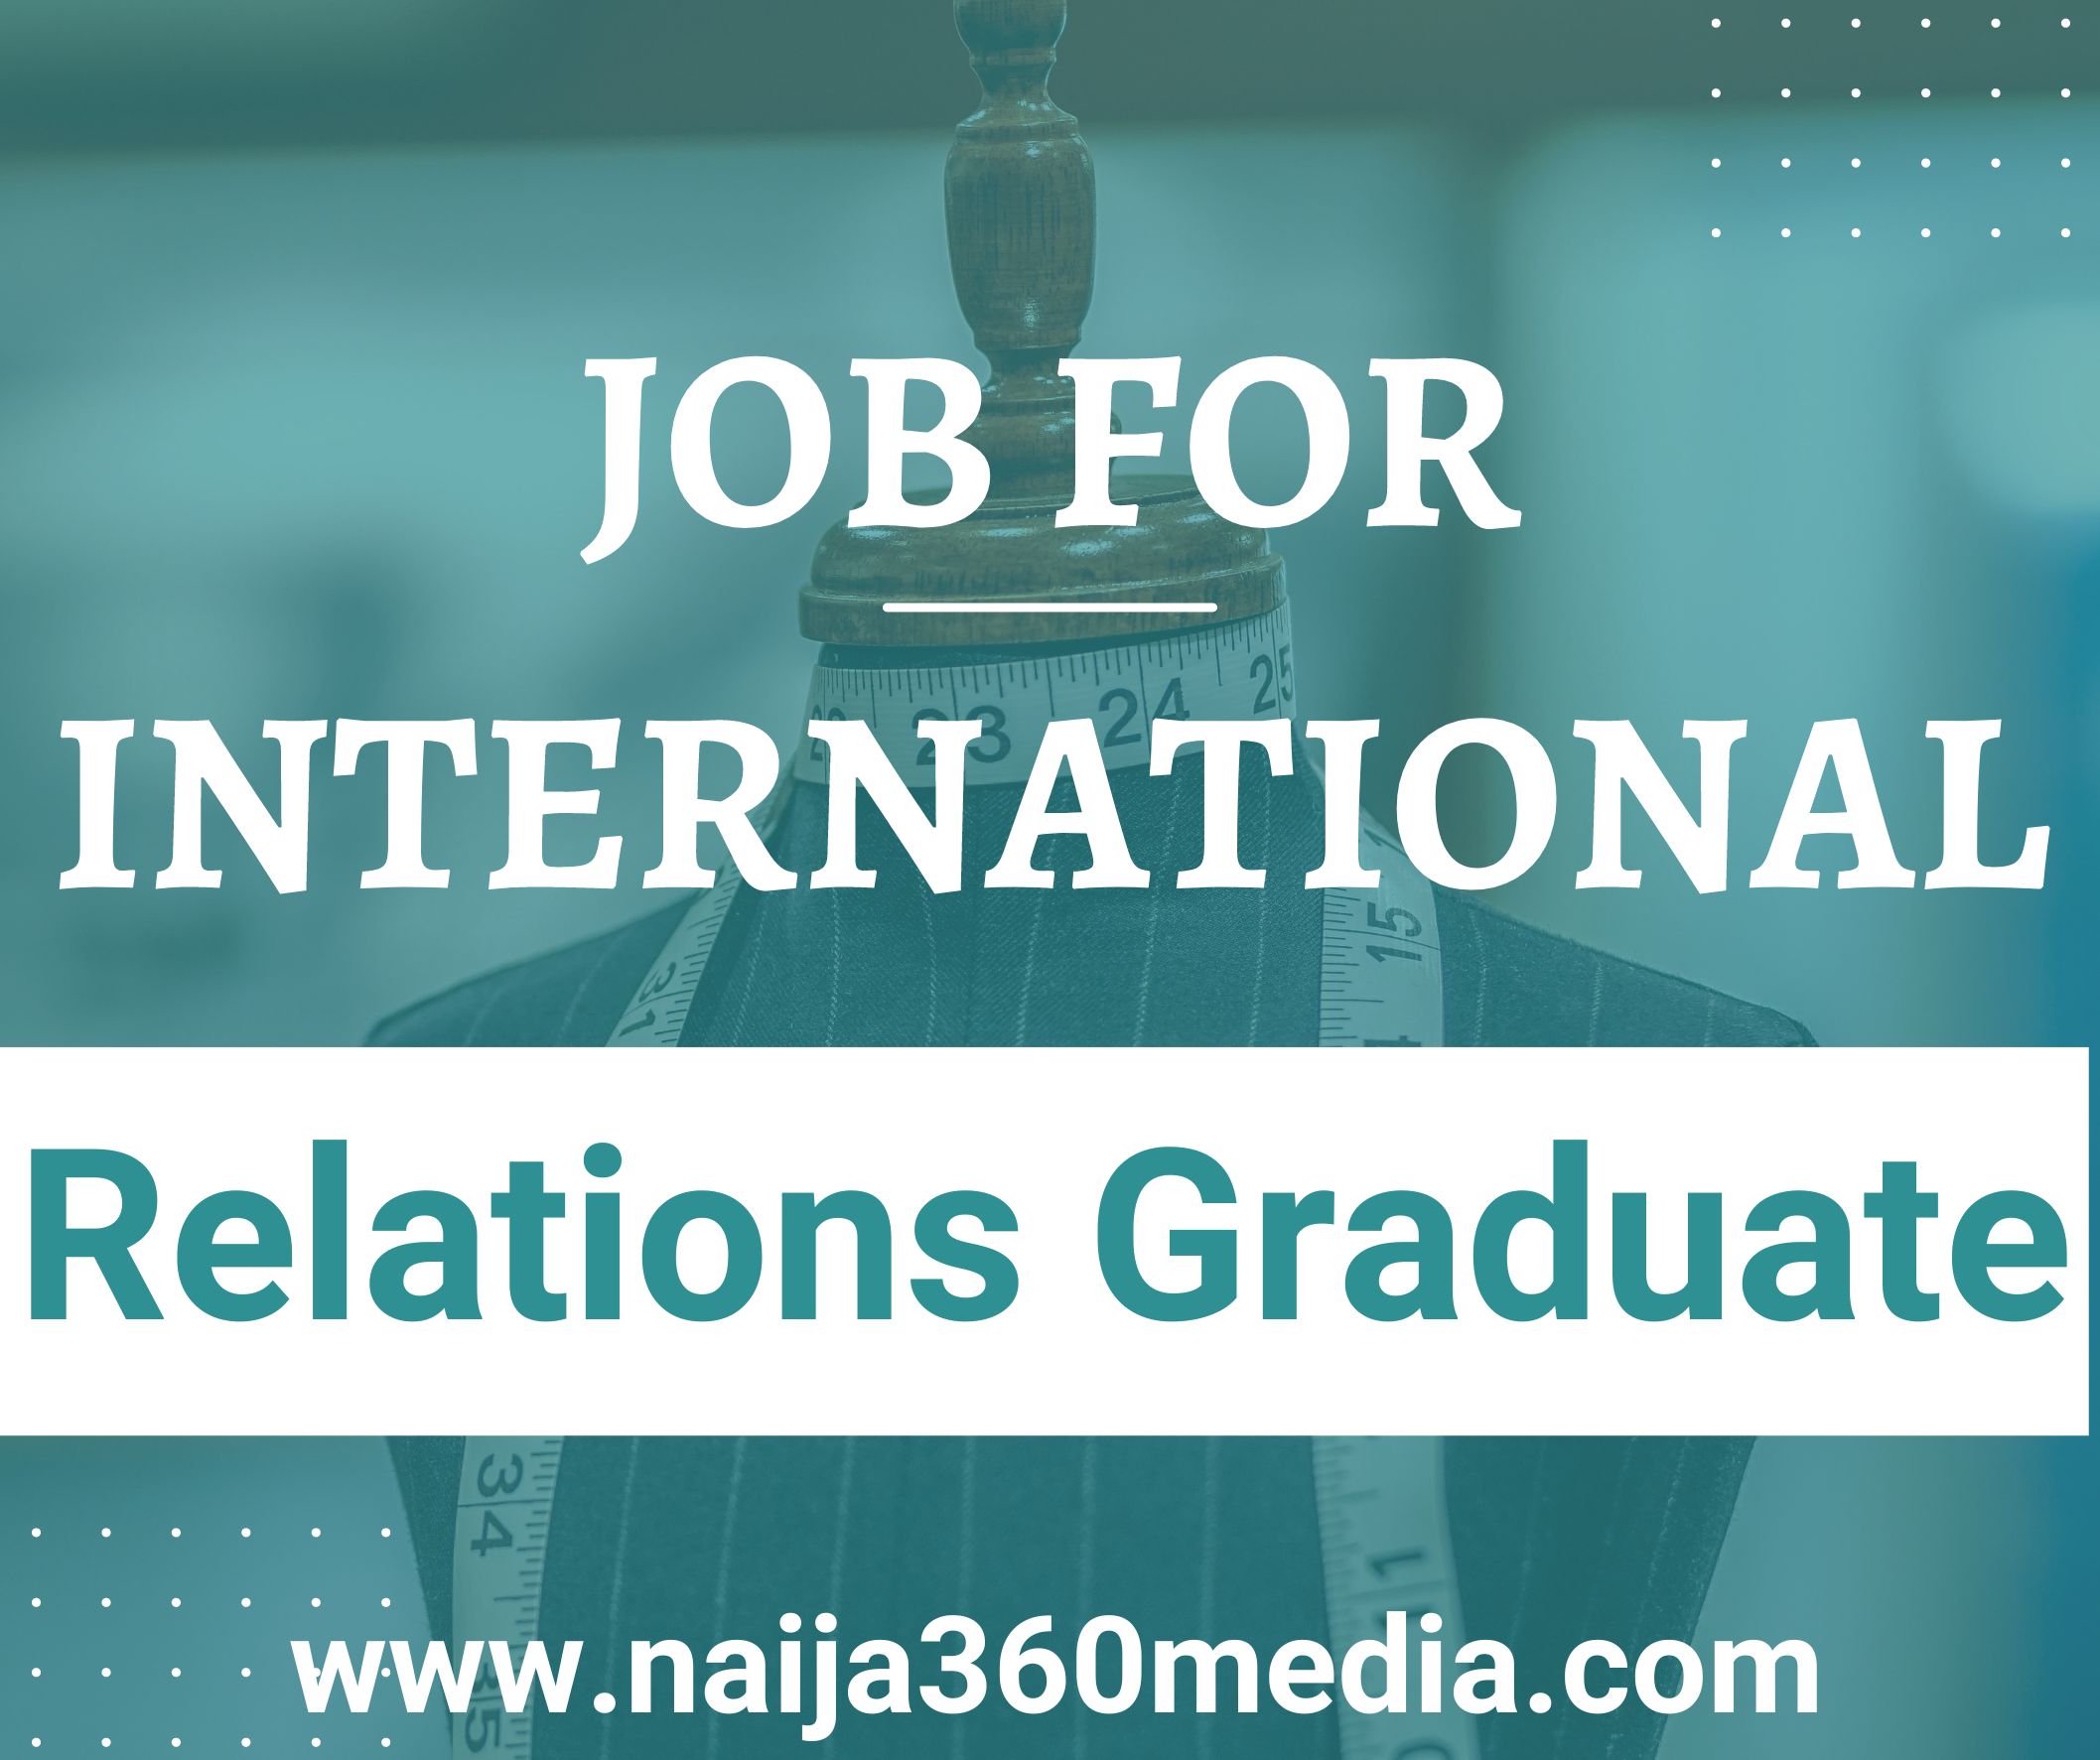 Job for International Relations Graduate